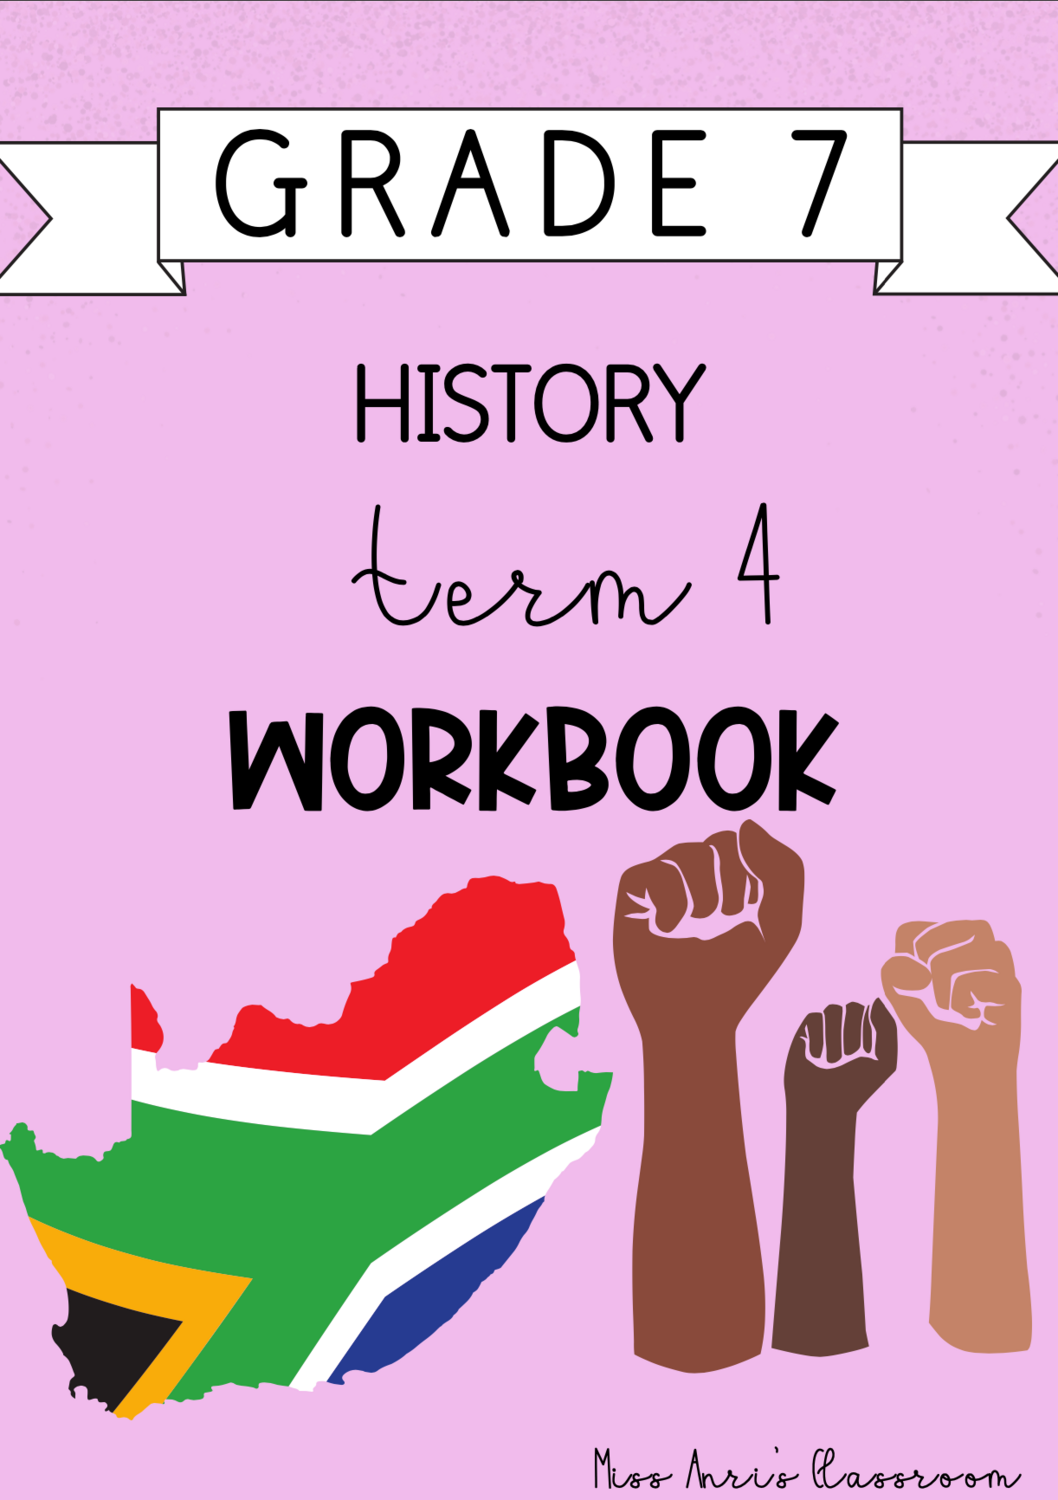 Grade 7 History term 4 workbook